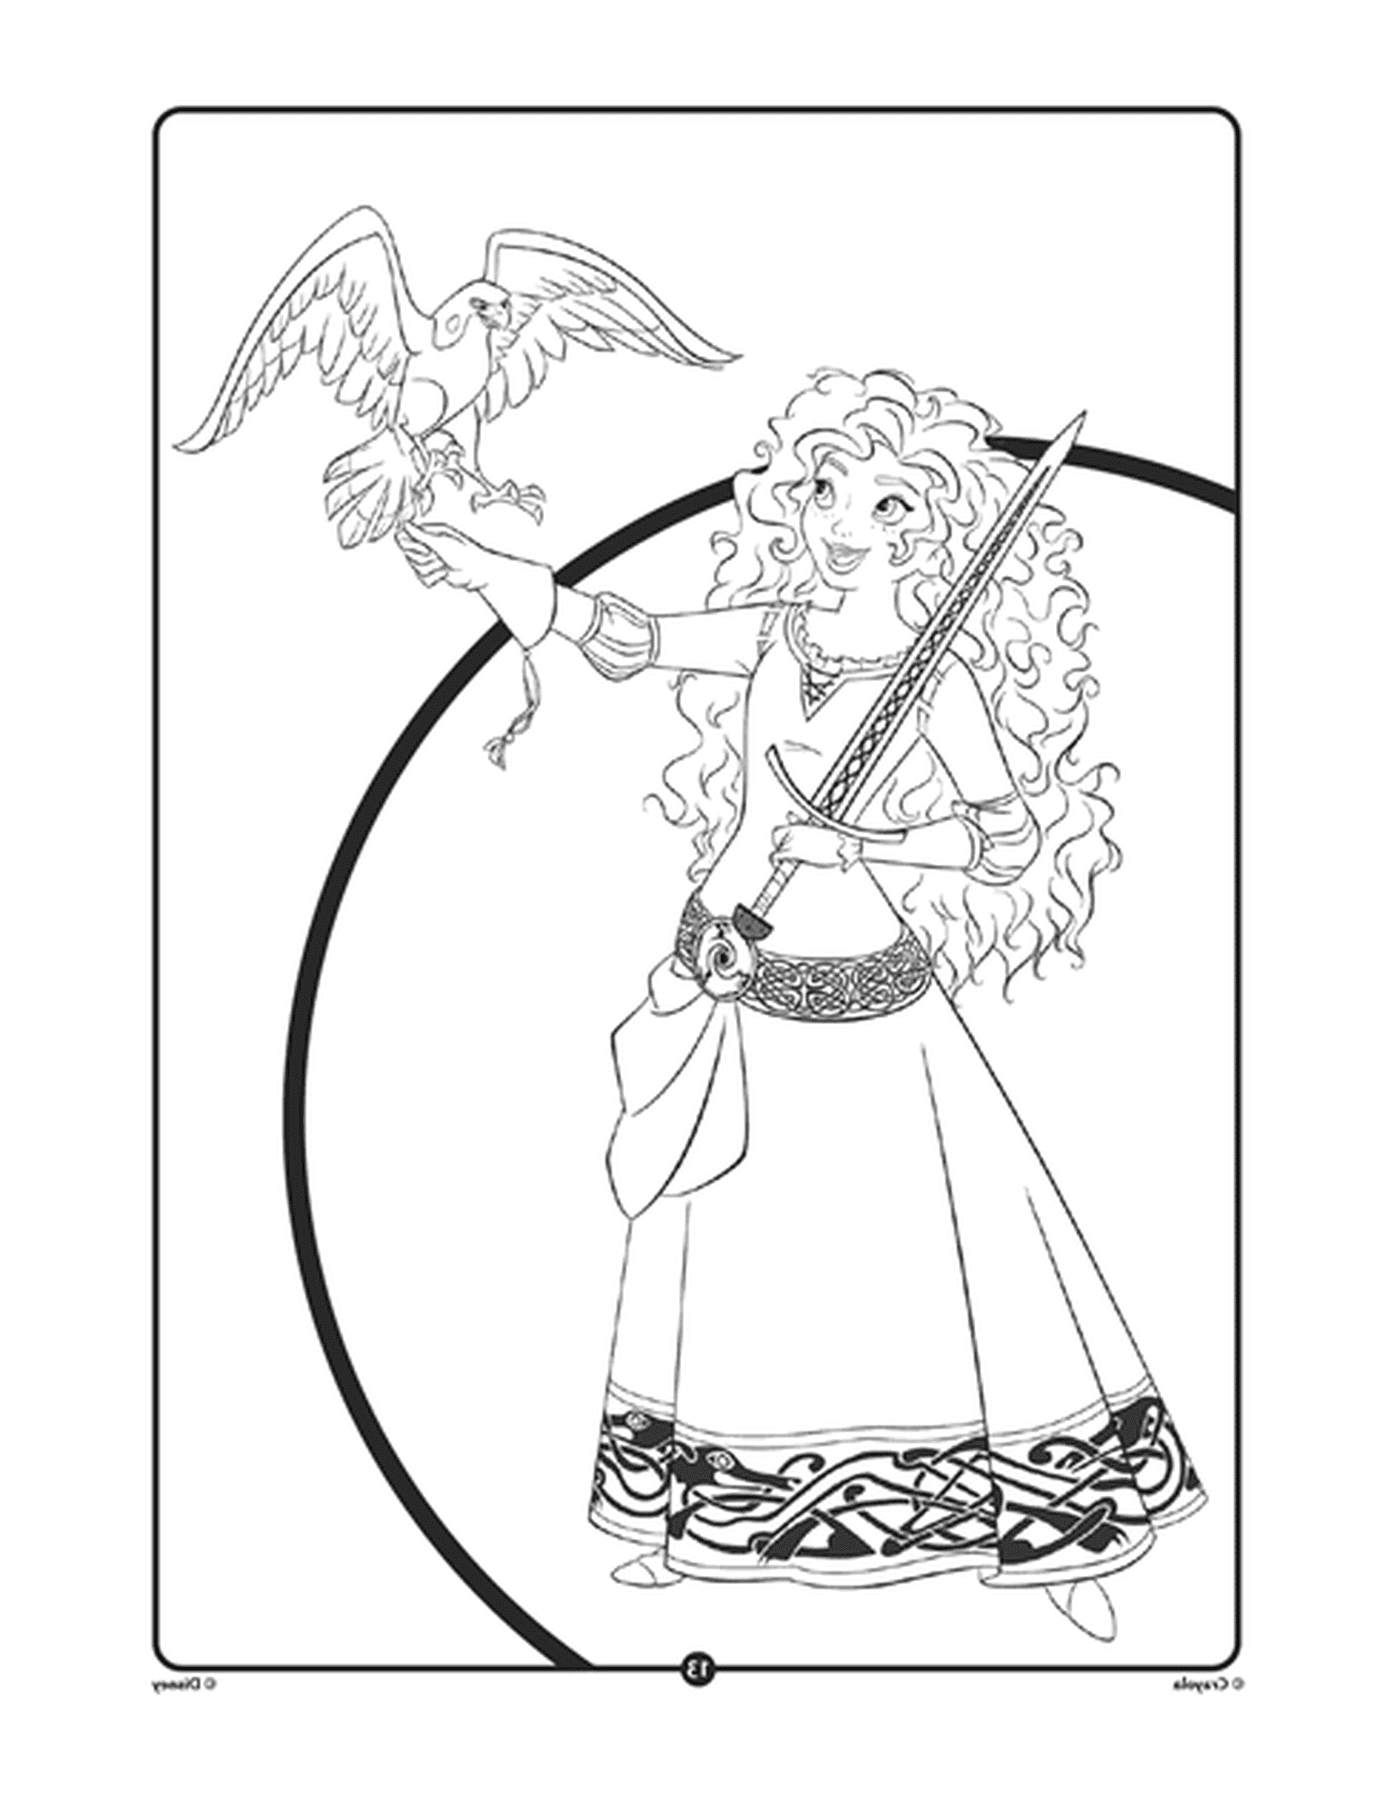  Merida, Princess Disney, holding a bird 